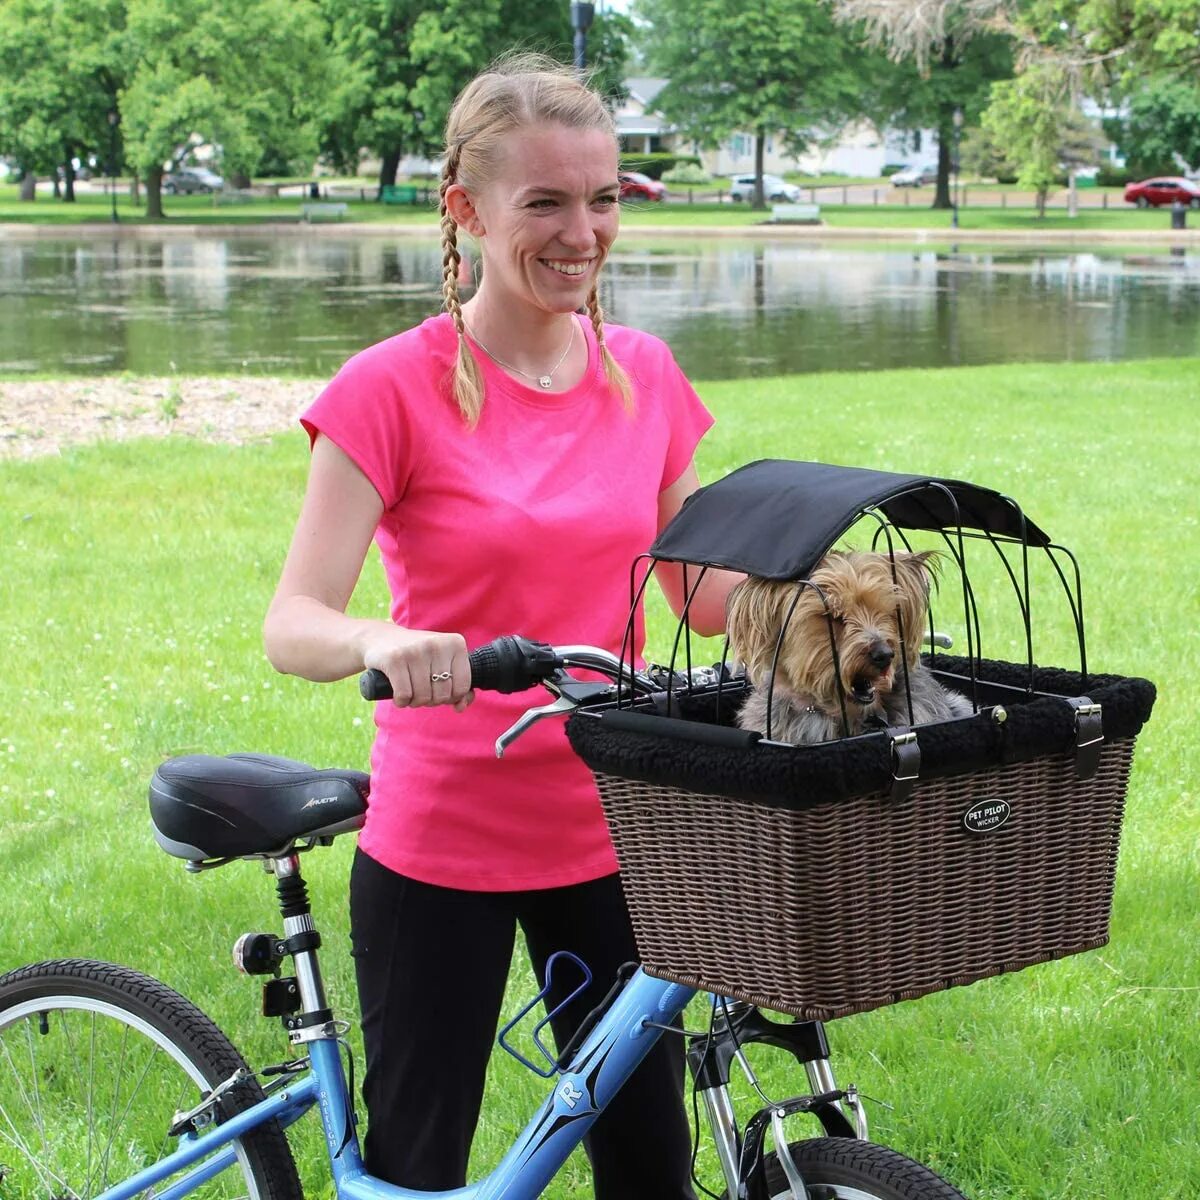 Travelin k9 Dog Bike Basket Carrier. Кормина на велосипед для собаки. Собака на велосипеде. Радиоуправляемый велосипед для собаки.